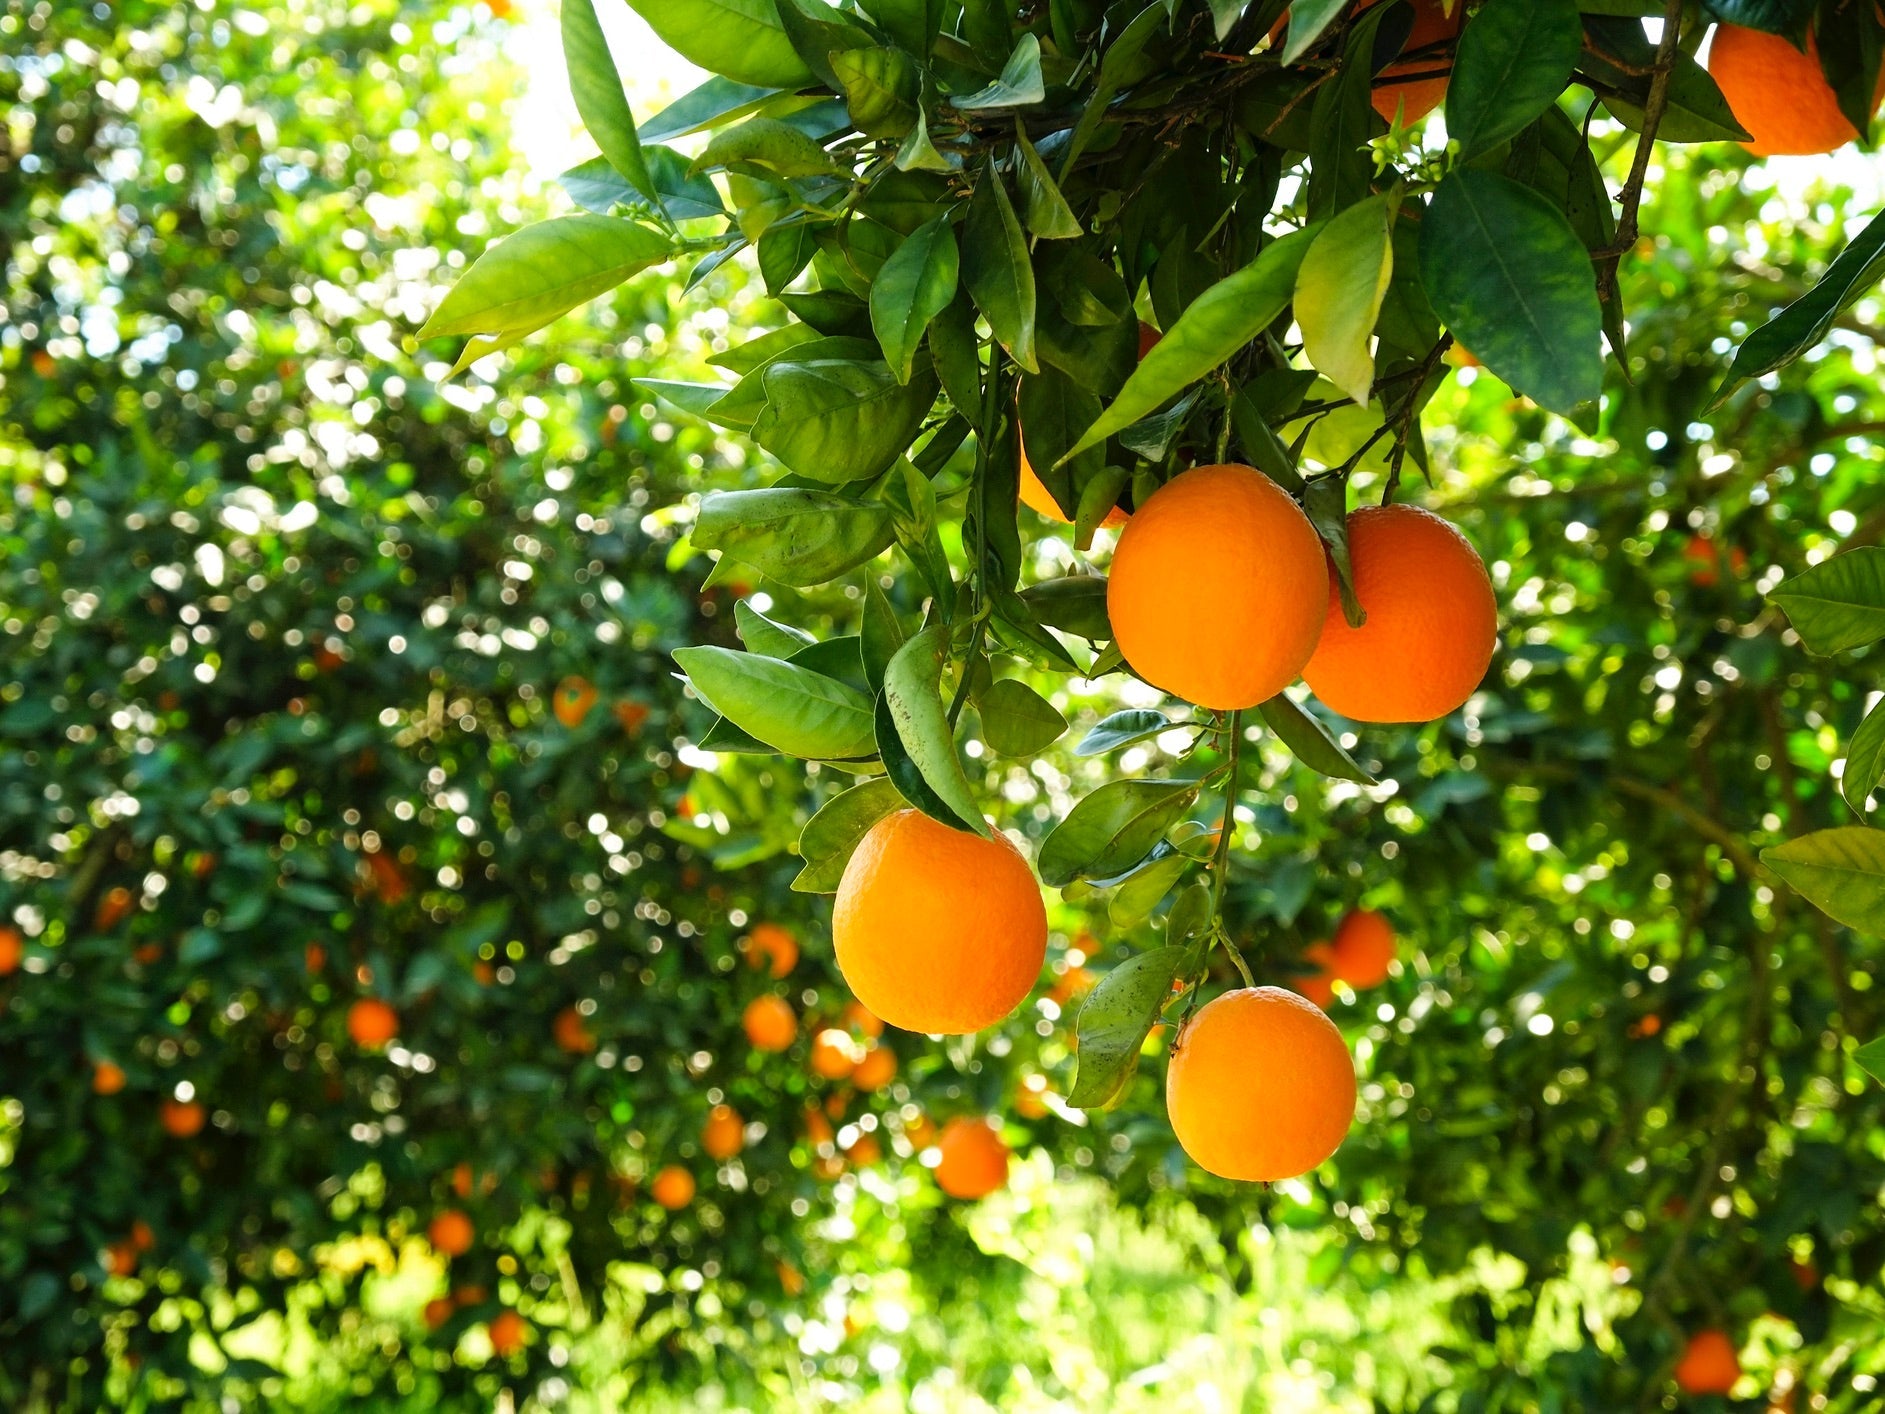 Gisborne Organic Oranges - Navel